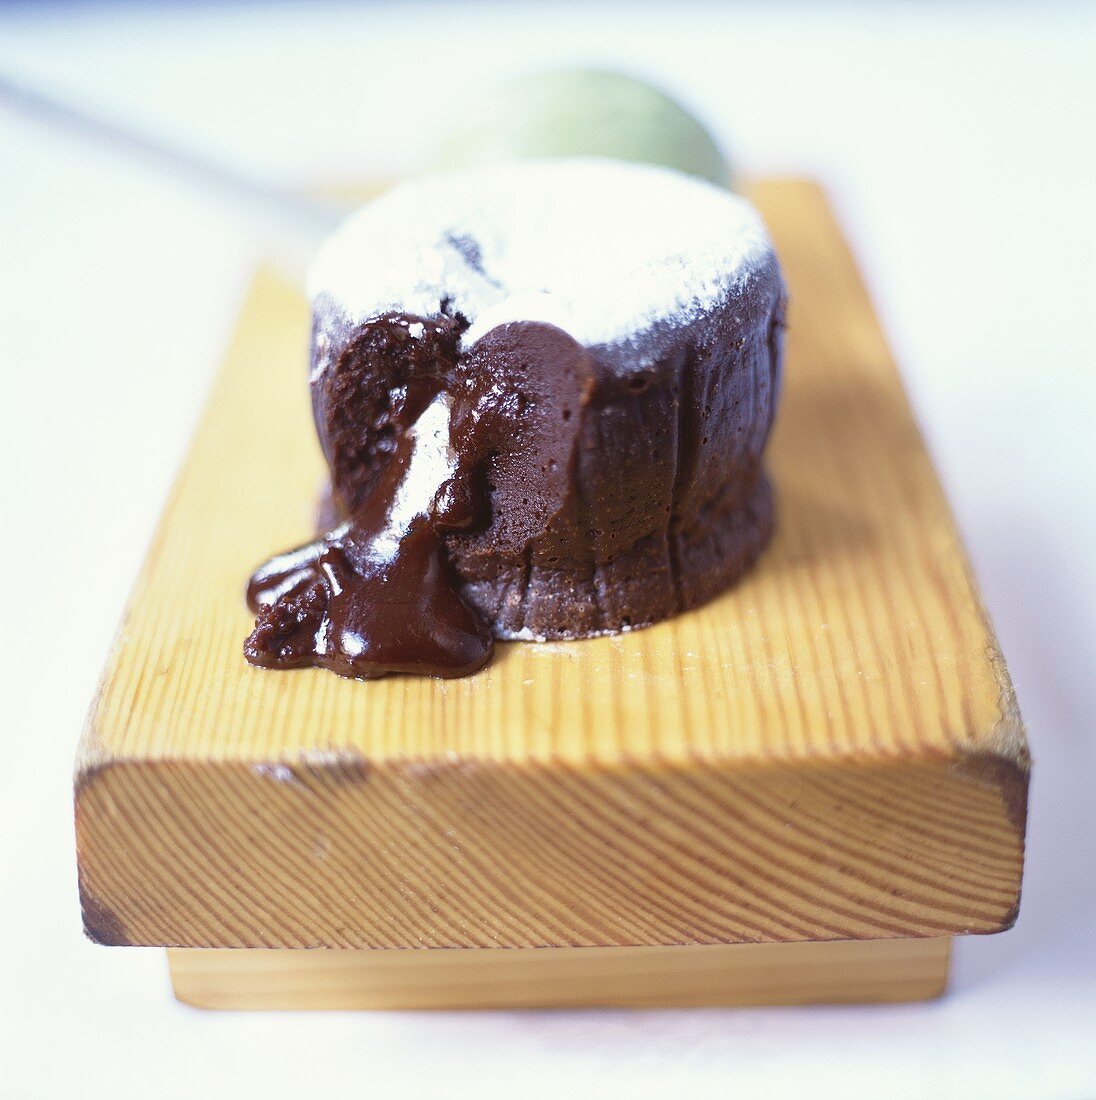 Chocolate pudding with icing sugar and chocolate sauce